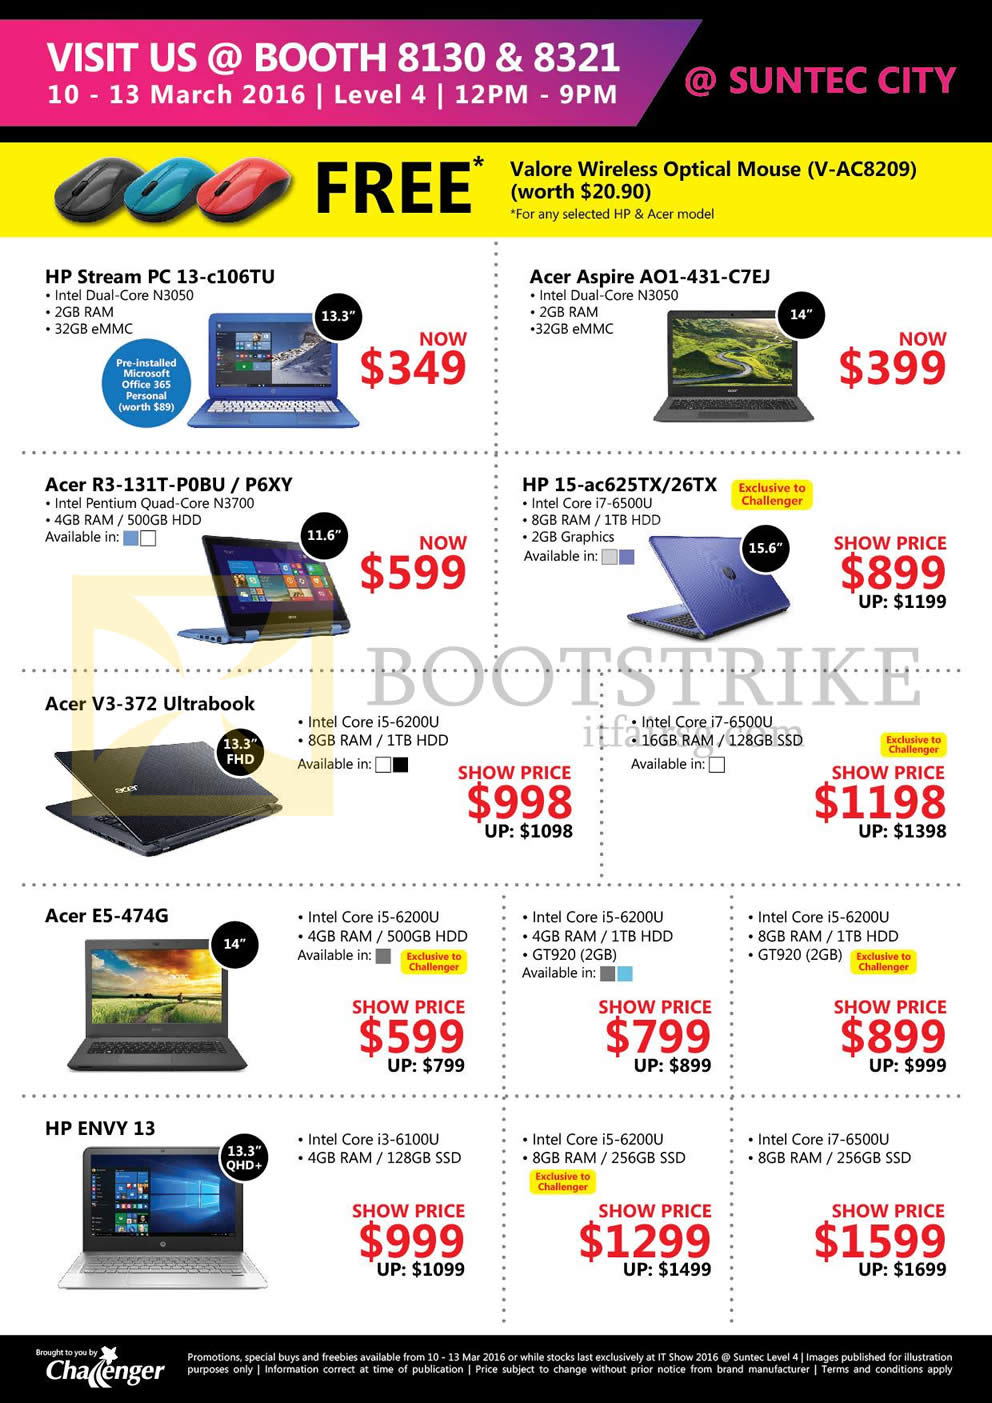 IT SHOW 2016 price list image brochure of Challenger Notebooks HP Stream, Envy, Acer Aspire V3 R3 E5